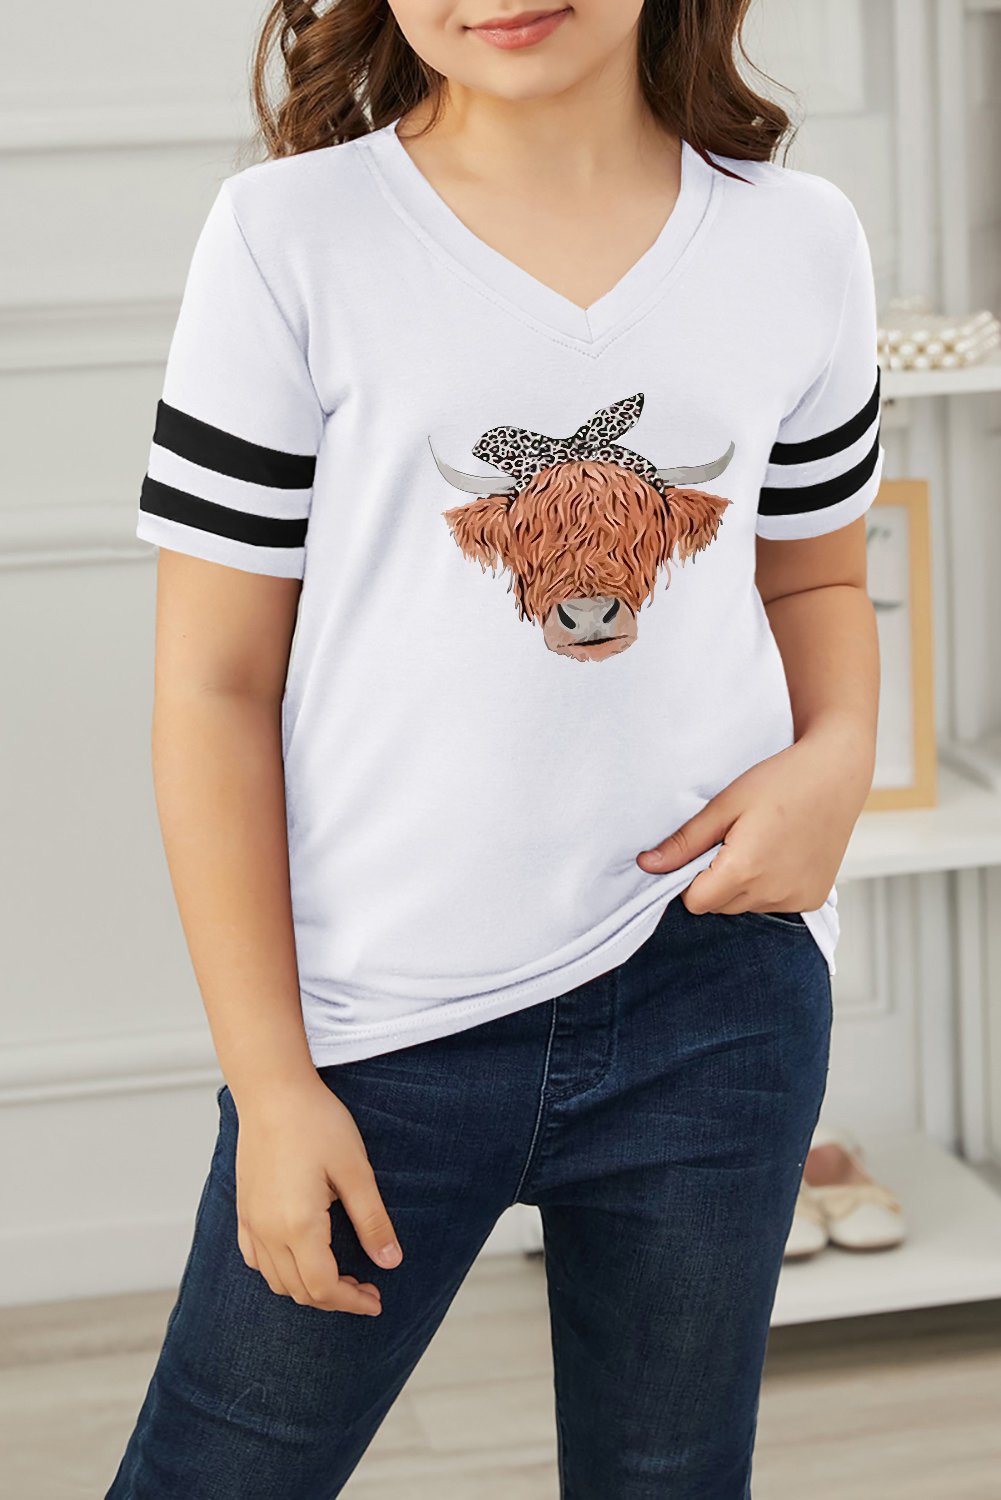 Youth girl's Cow Head Print Shirt w/ Stripes